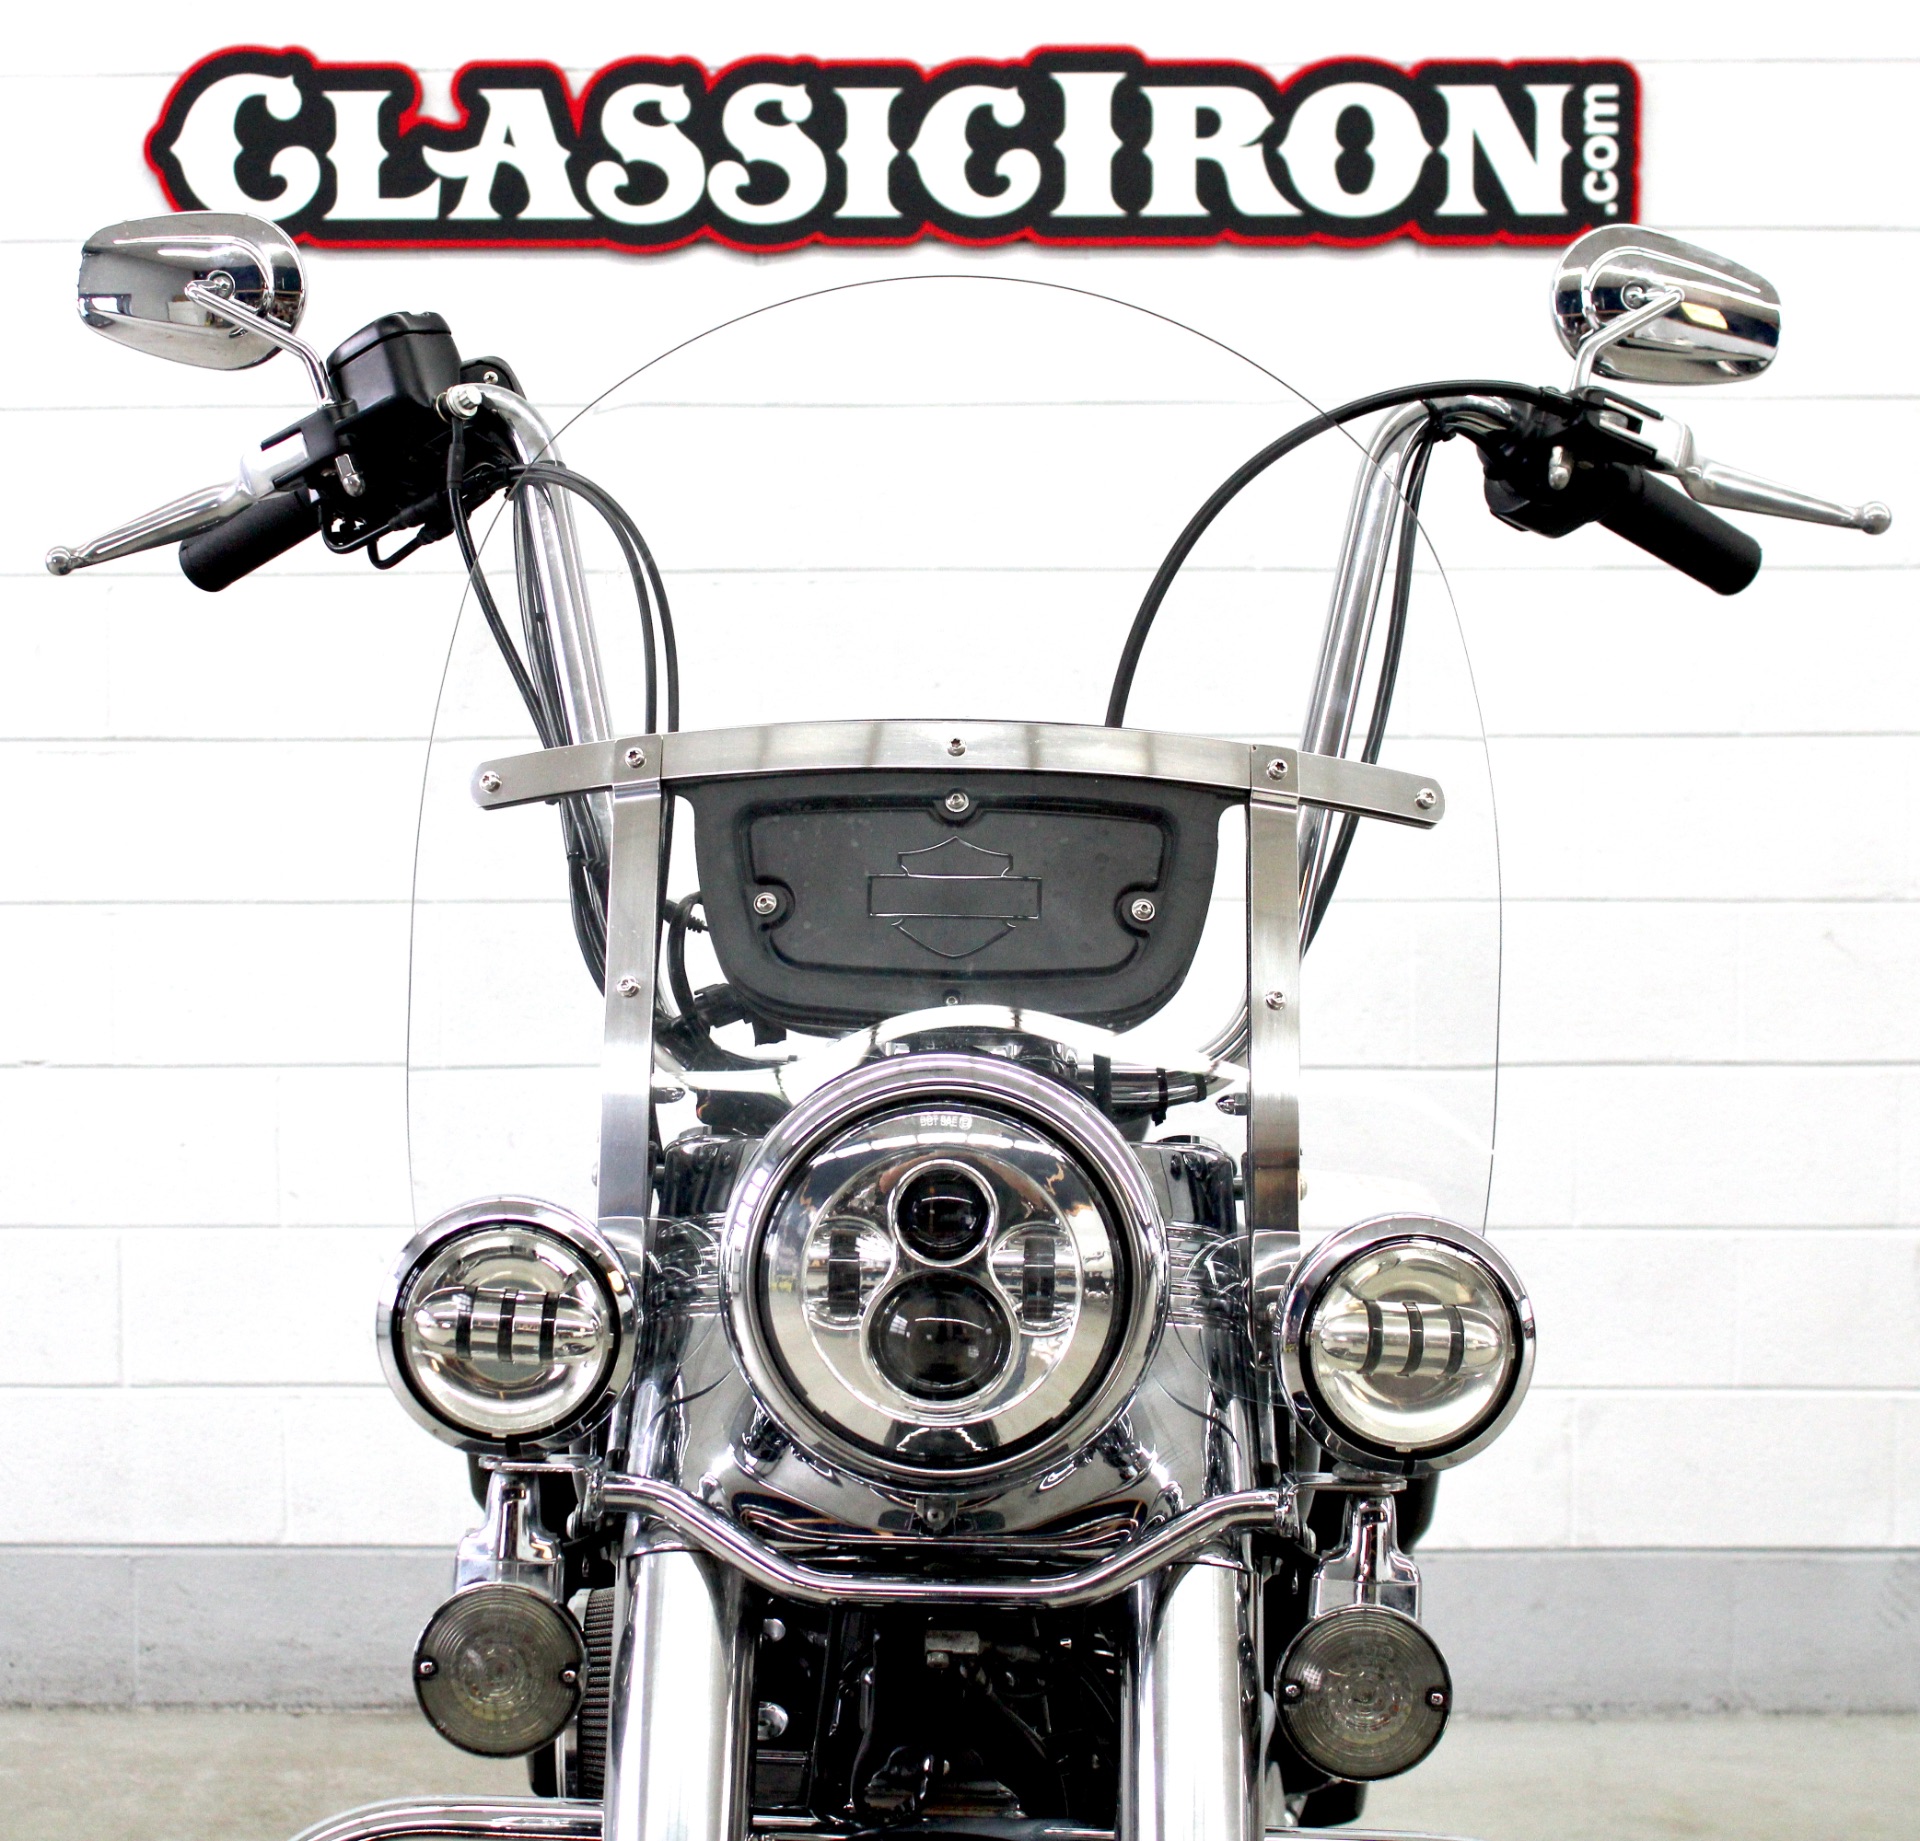 2014 Harley-Davidson Heritage Softail® Classic in Fredericksburg, Virginia - Photo 8